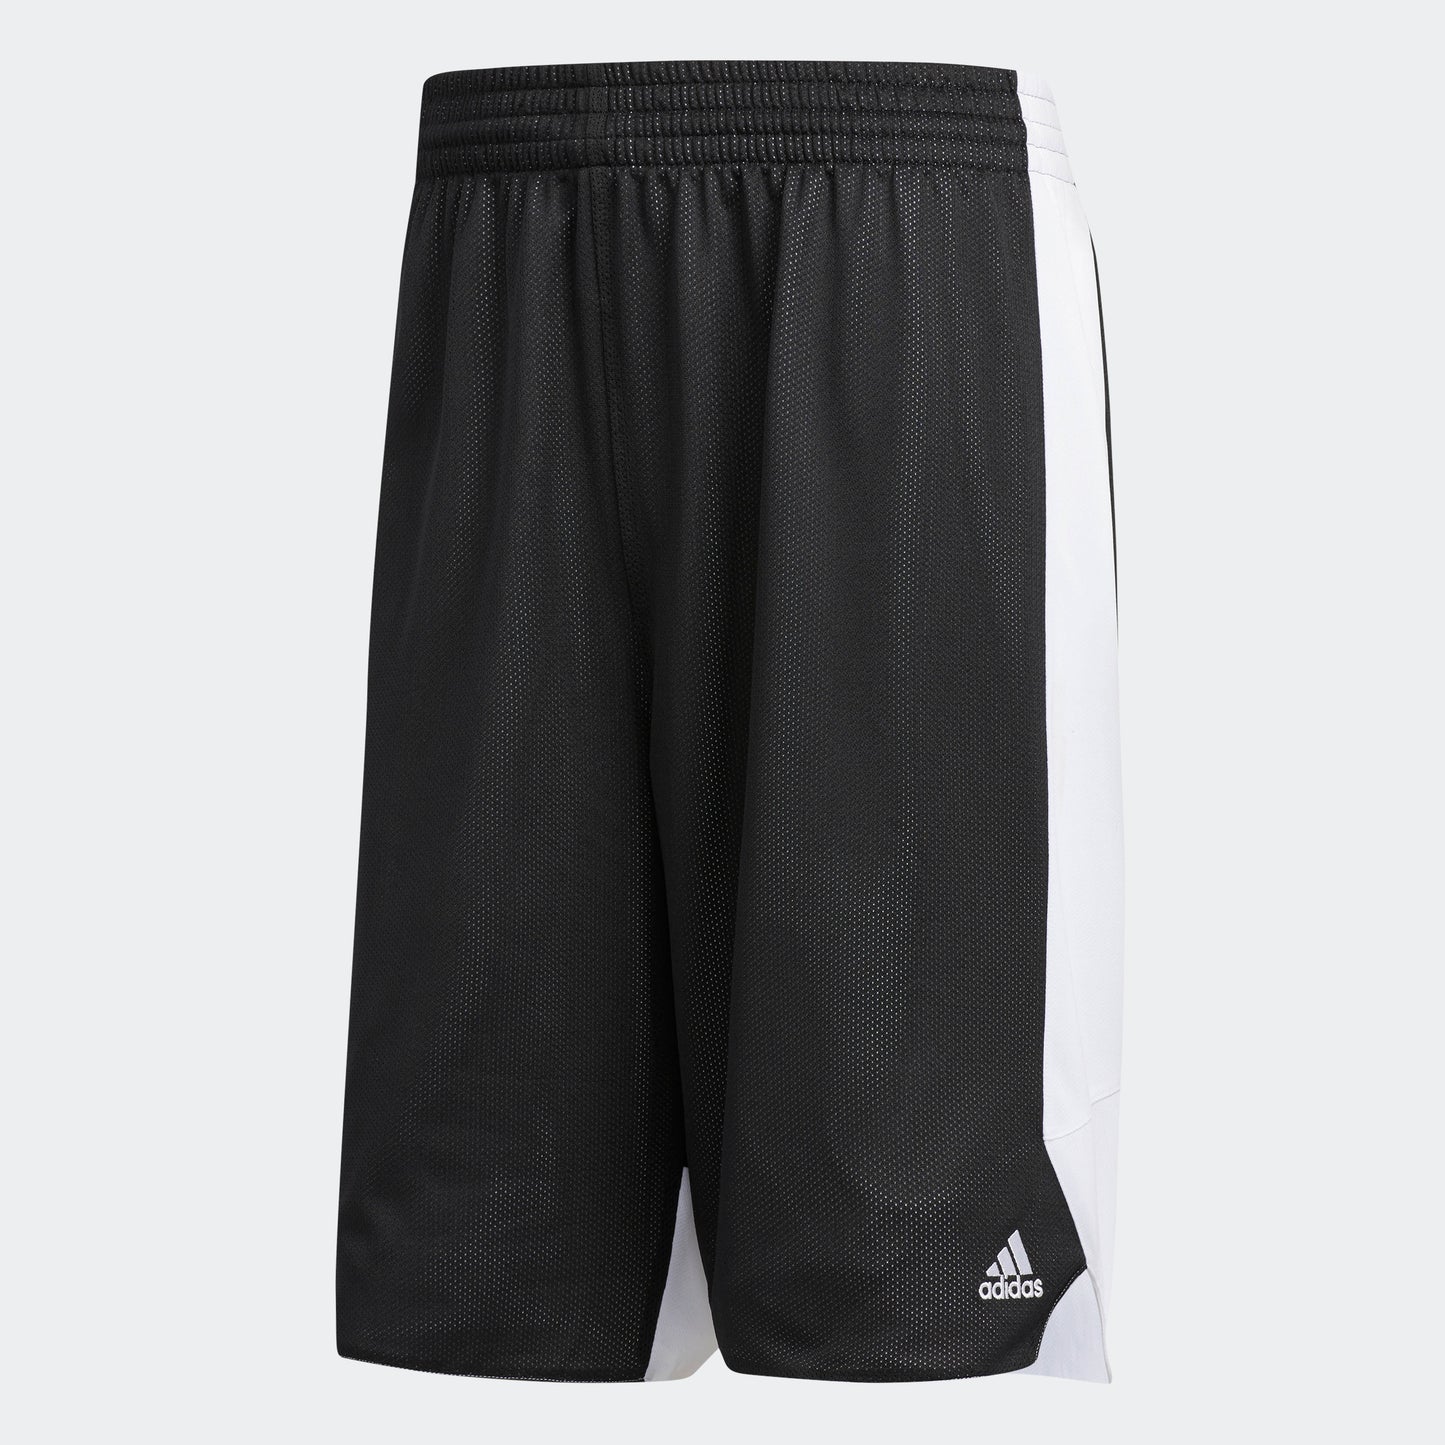 adidas REVERSIBLE CRAZY EXPLOSIVE Shorts | Black-White | Men's